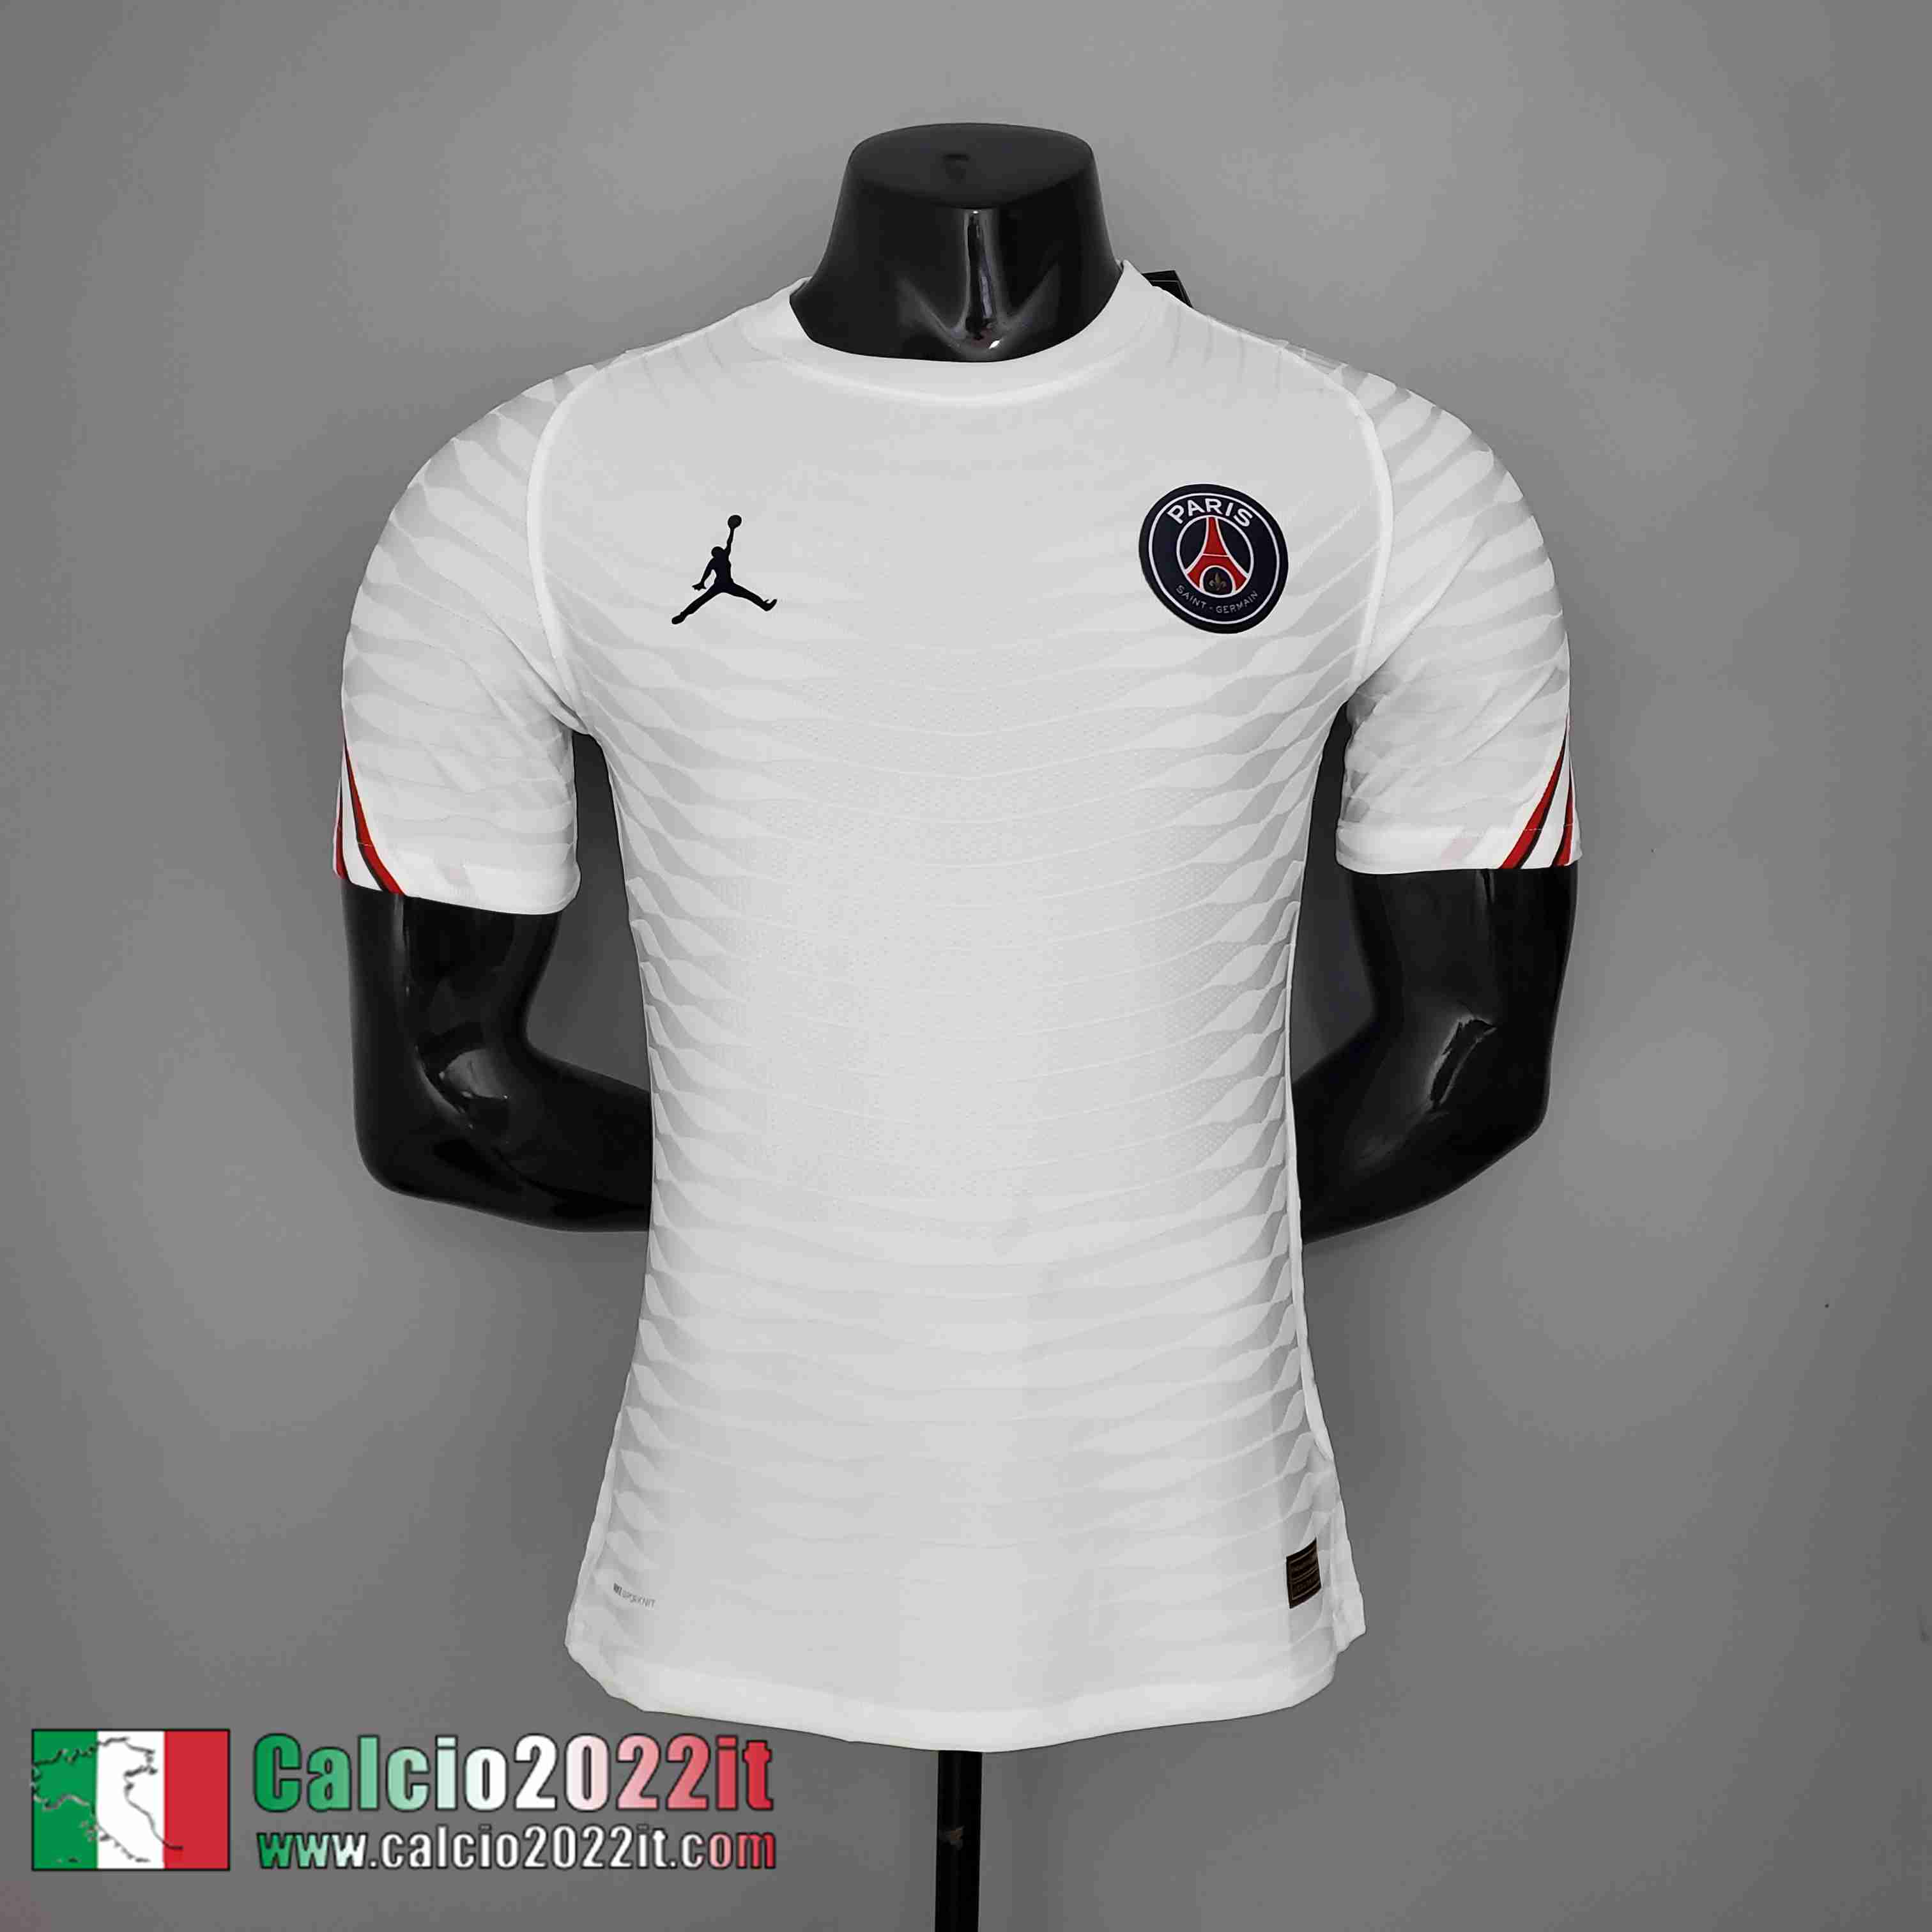 PSG T-shirt Uomo Nero KT02 2021 2022